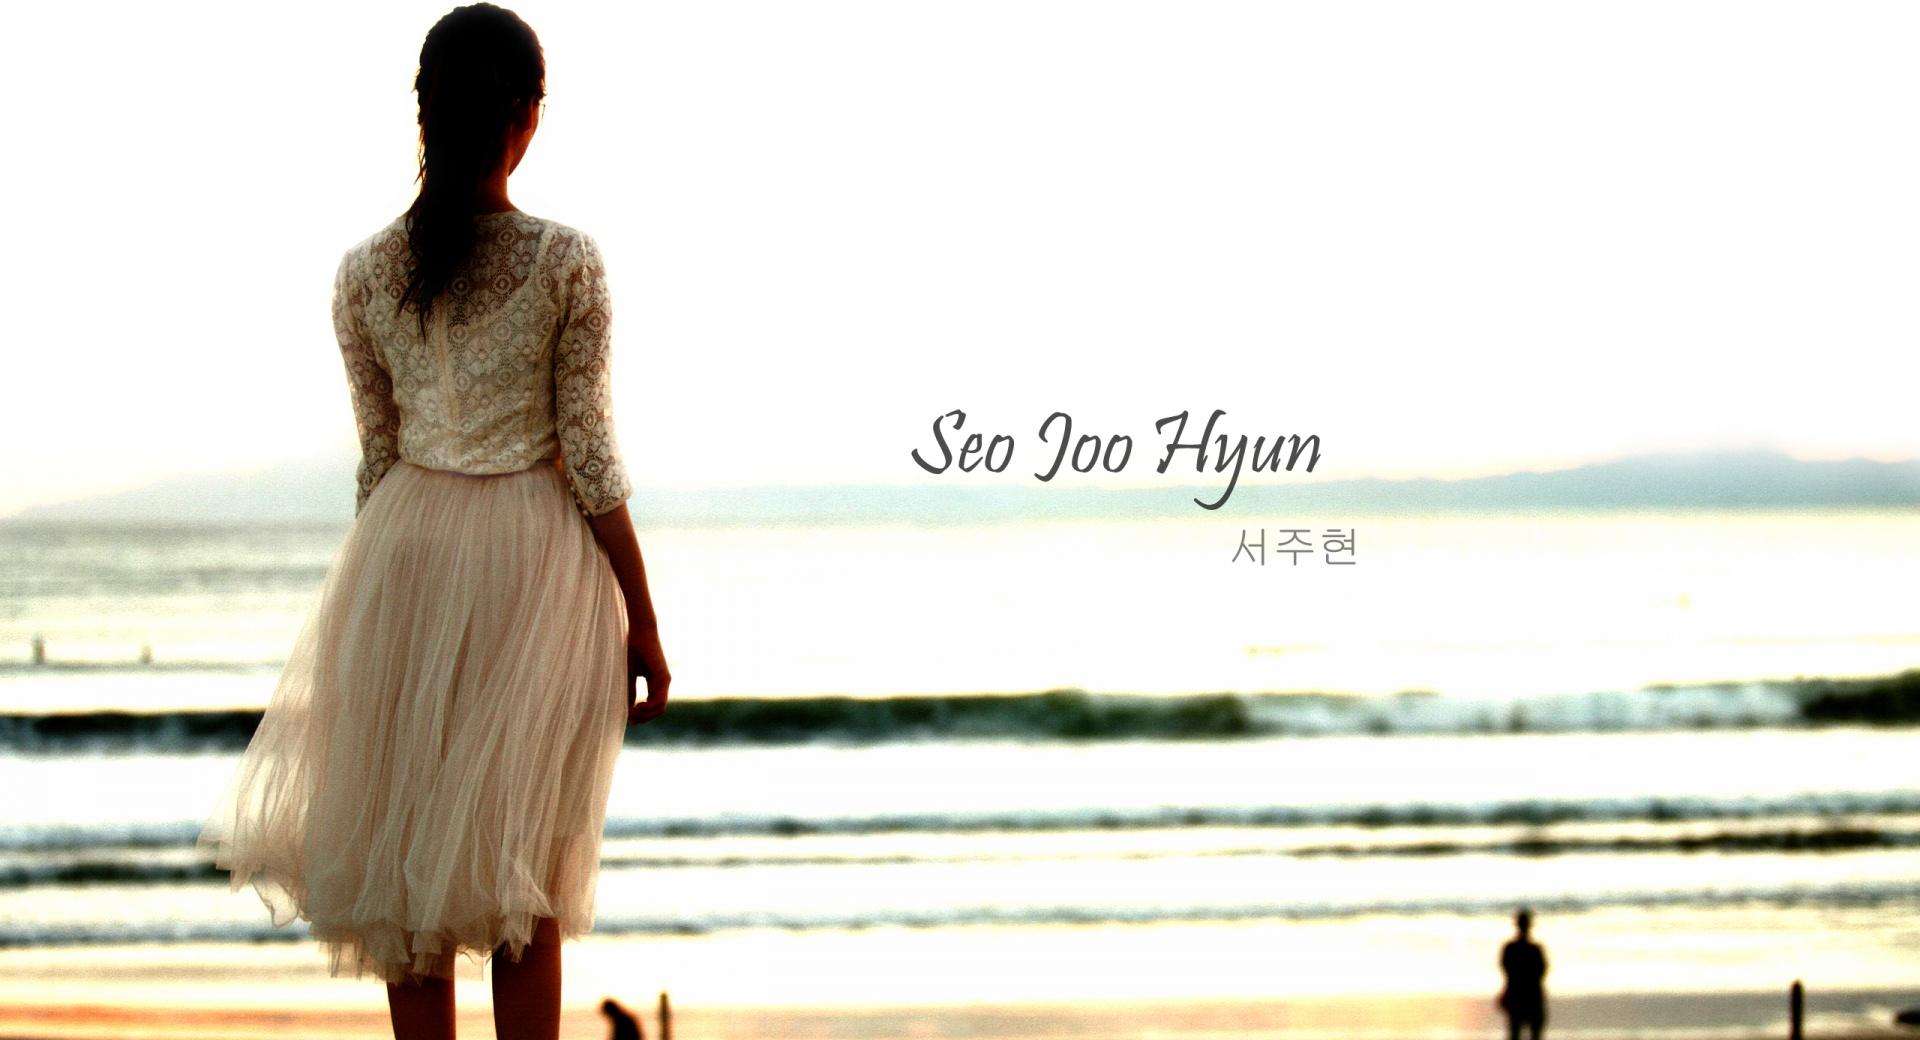 SNSD Seo Joo Hyun wallpapers HD quality